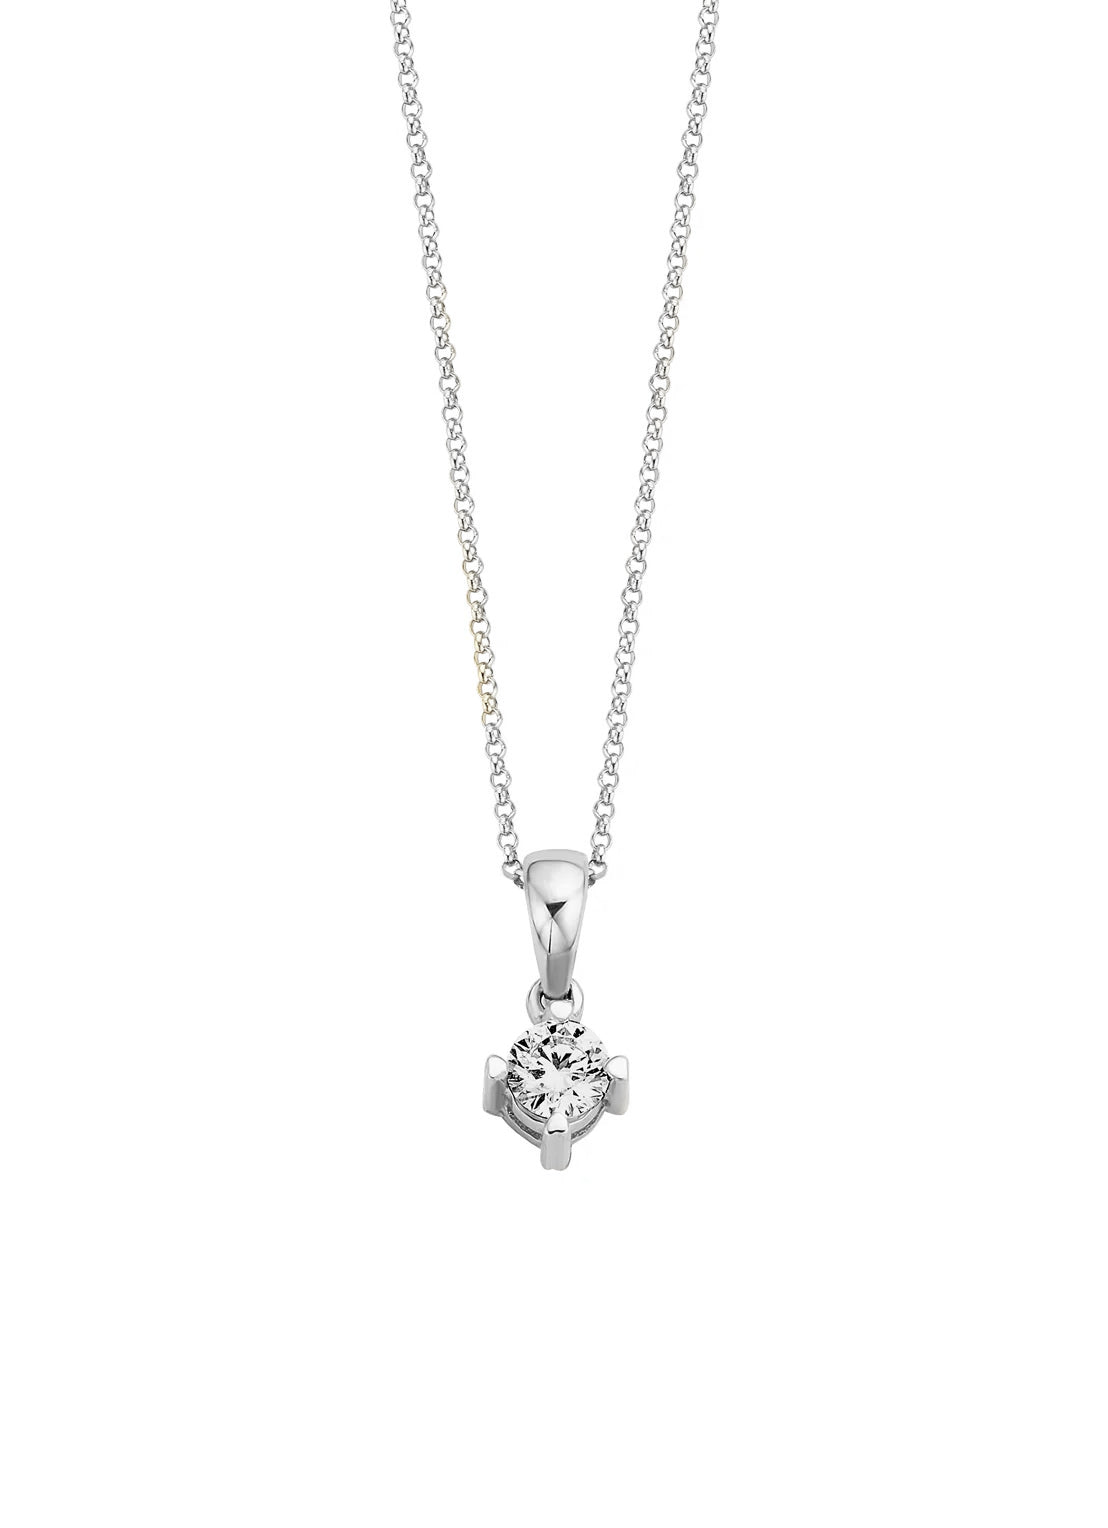 White gold pendant, 0.16 CT Diamant, Hearts & Arrows